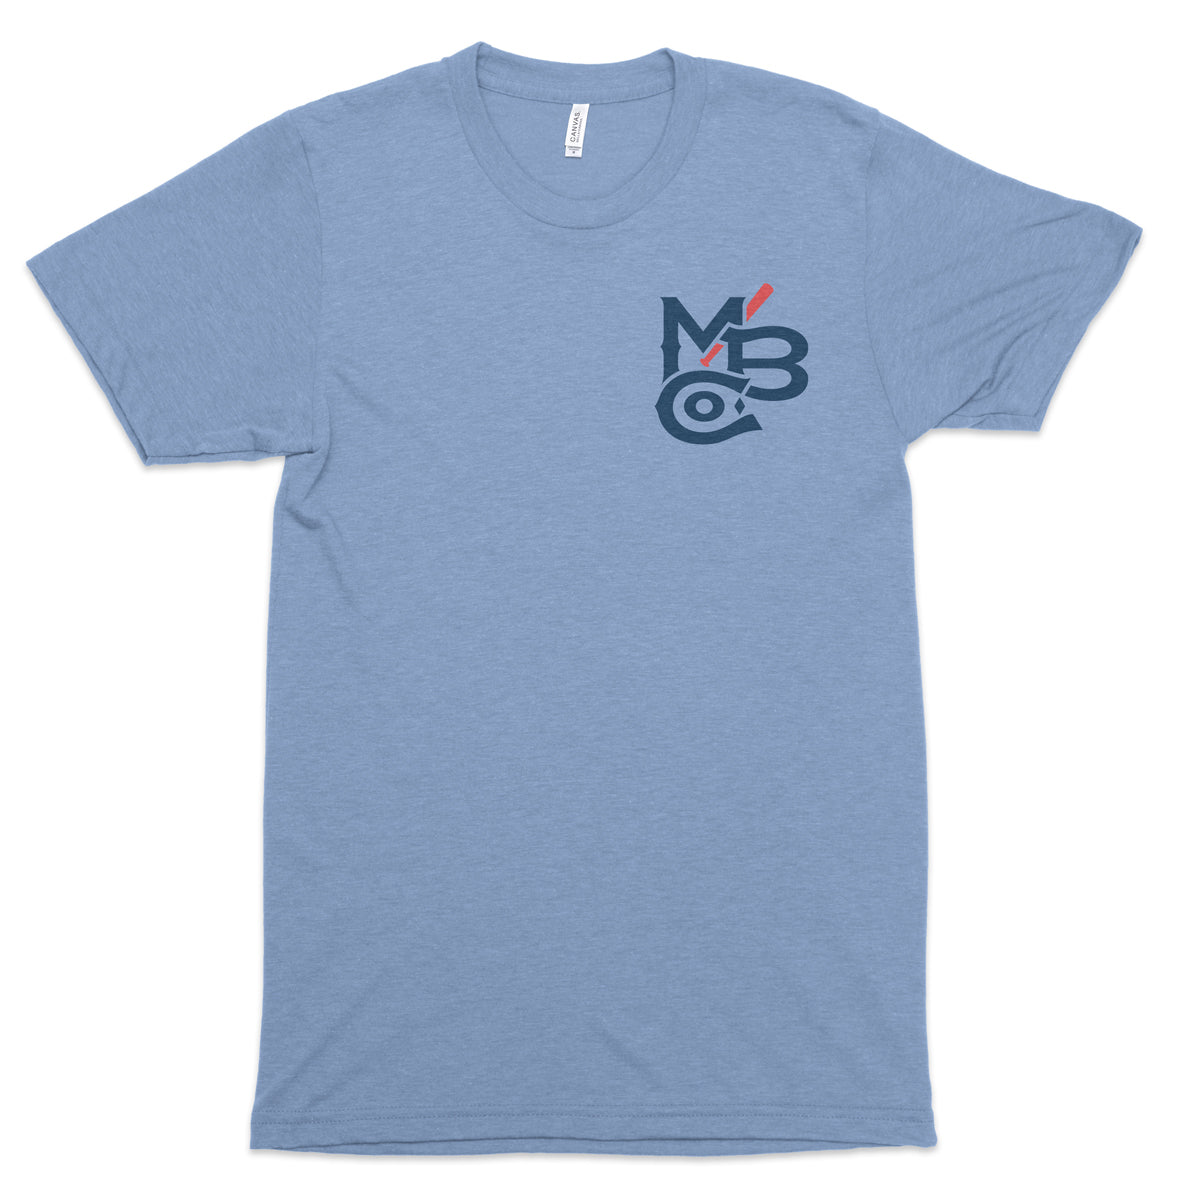 MBCO logo short sleeve tee (powder blue)